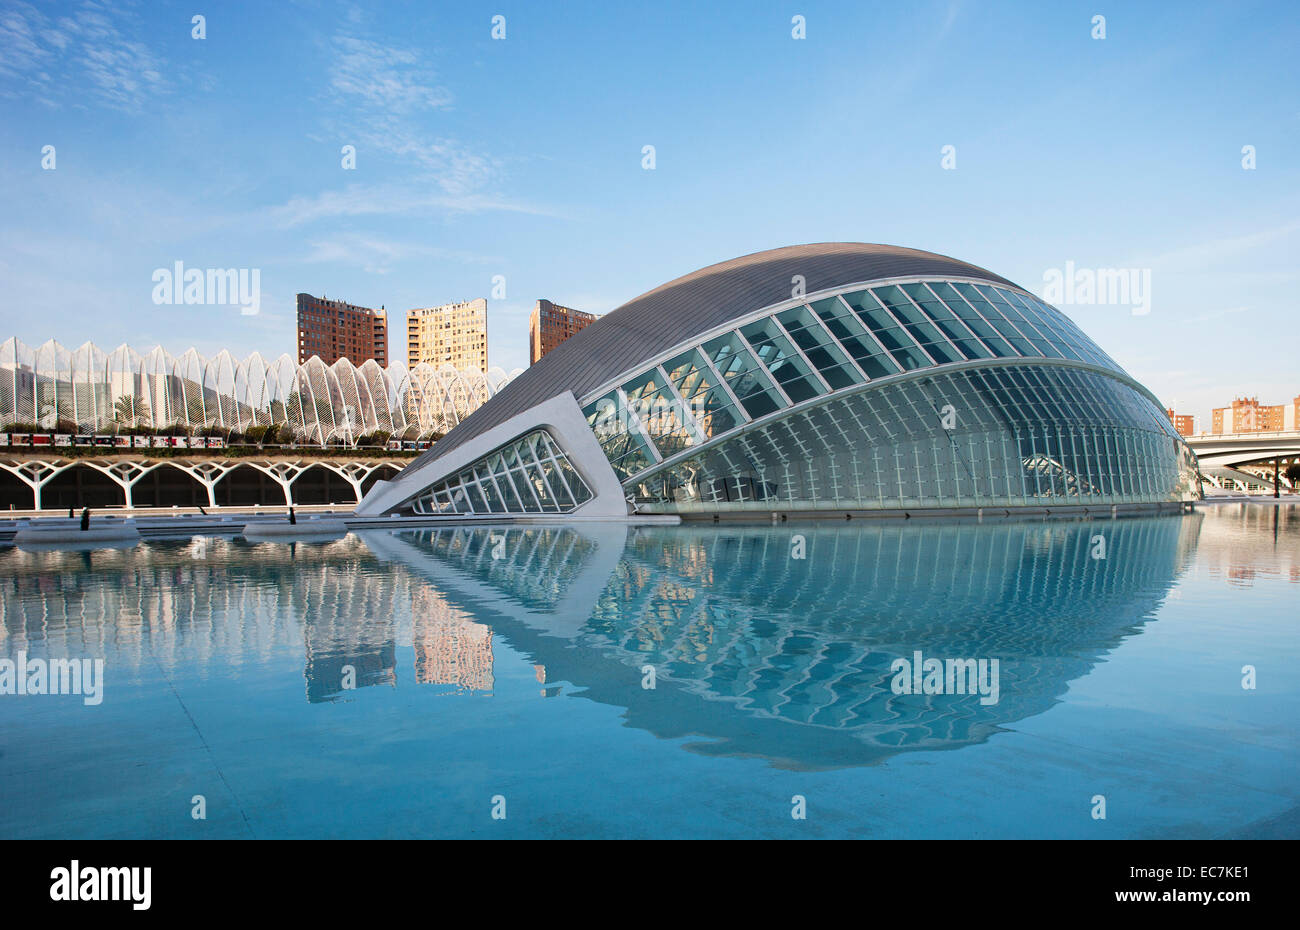 Spain, Valencia, City of Arts and Sciences, cinema L'Hemisferic Stock Photo